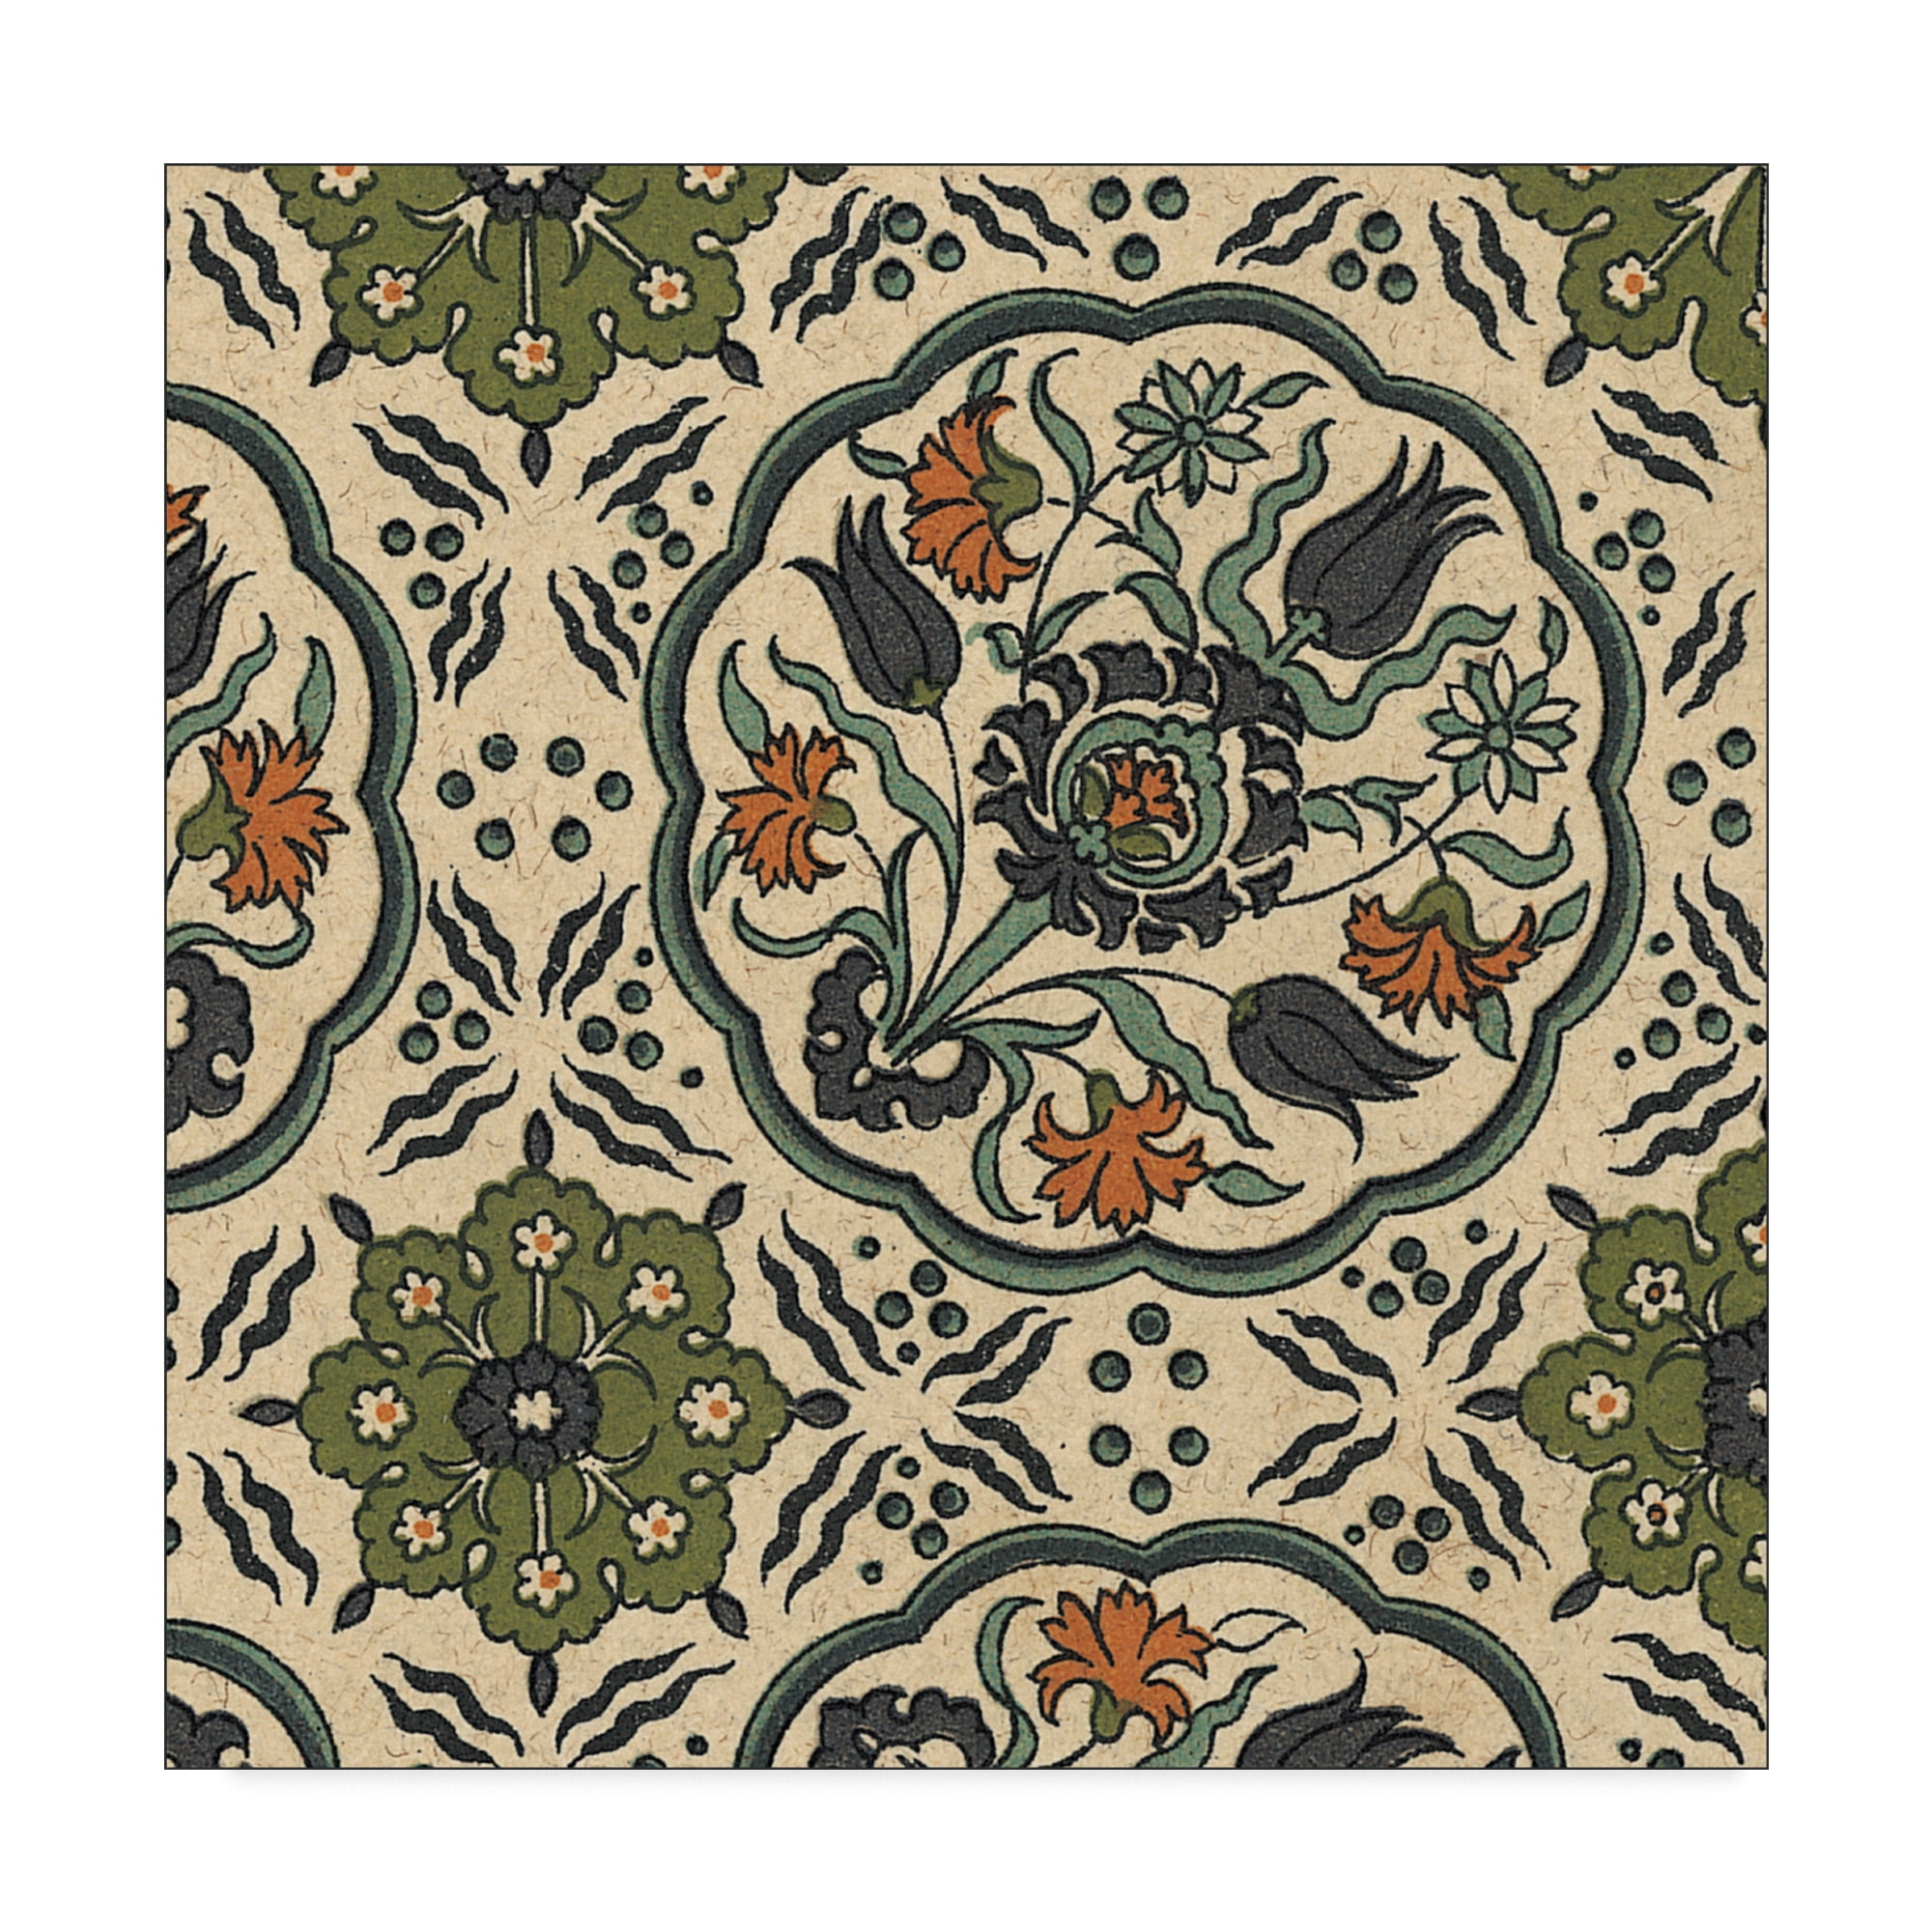 18x18-Inch Trademark Fine Art Turkish Tile I by Jodi Fuchs 